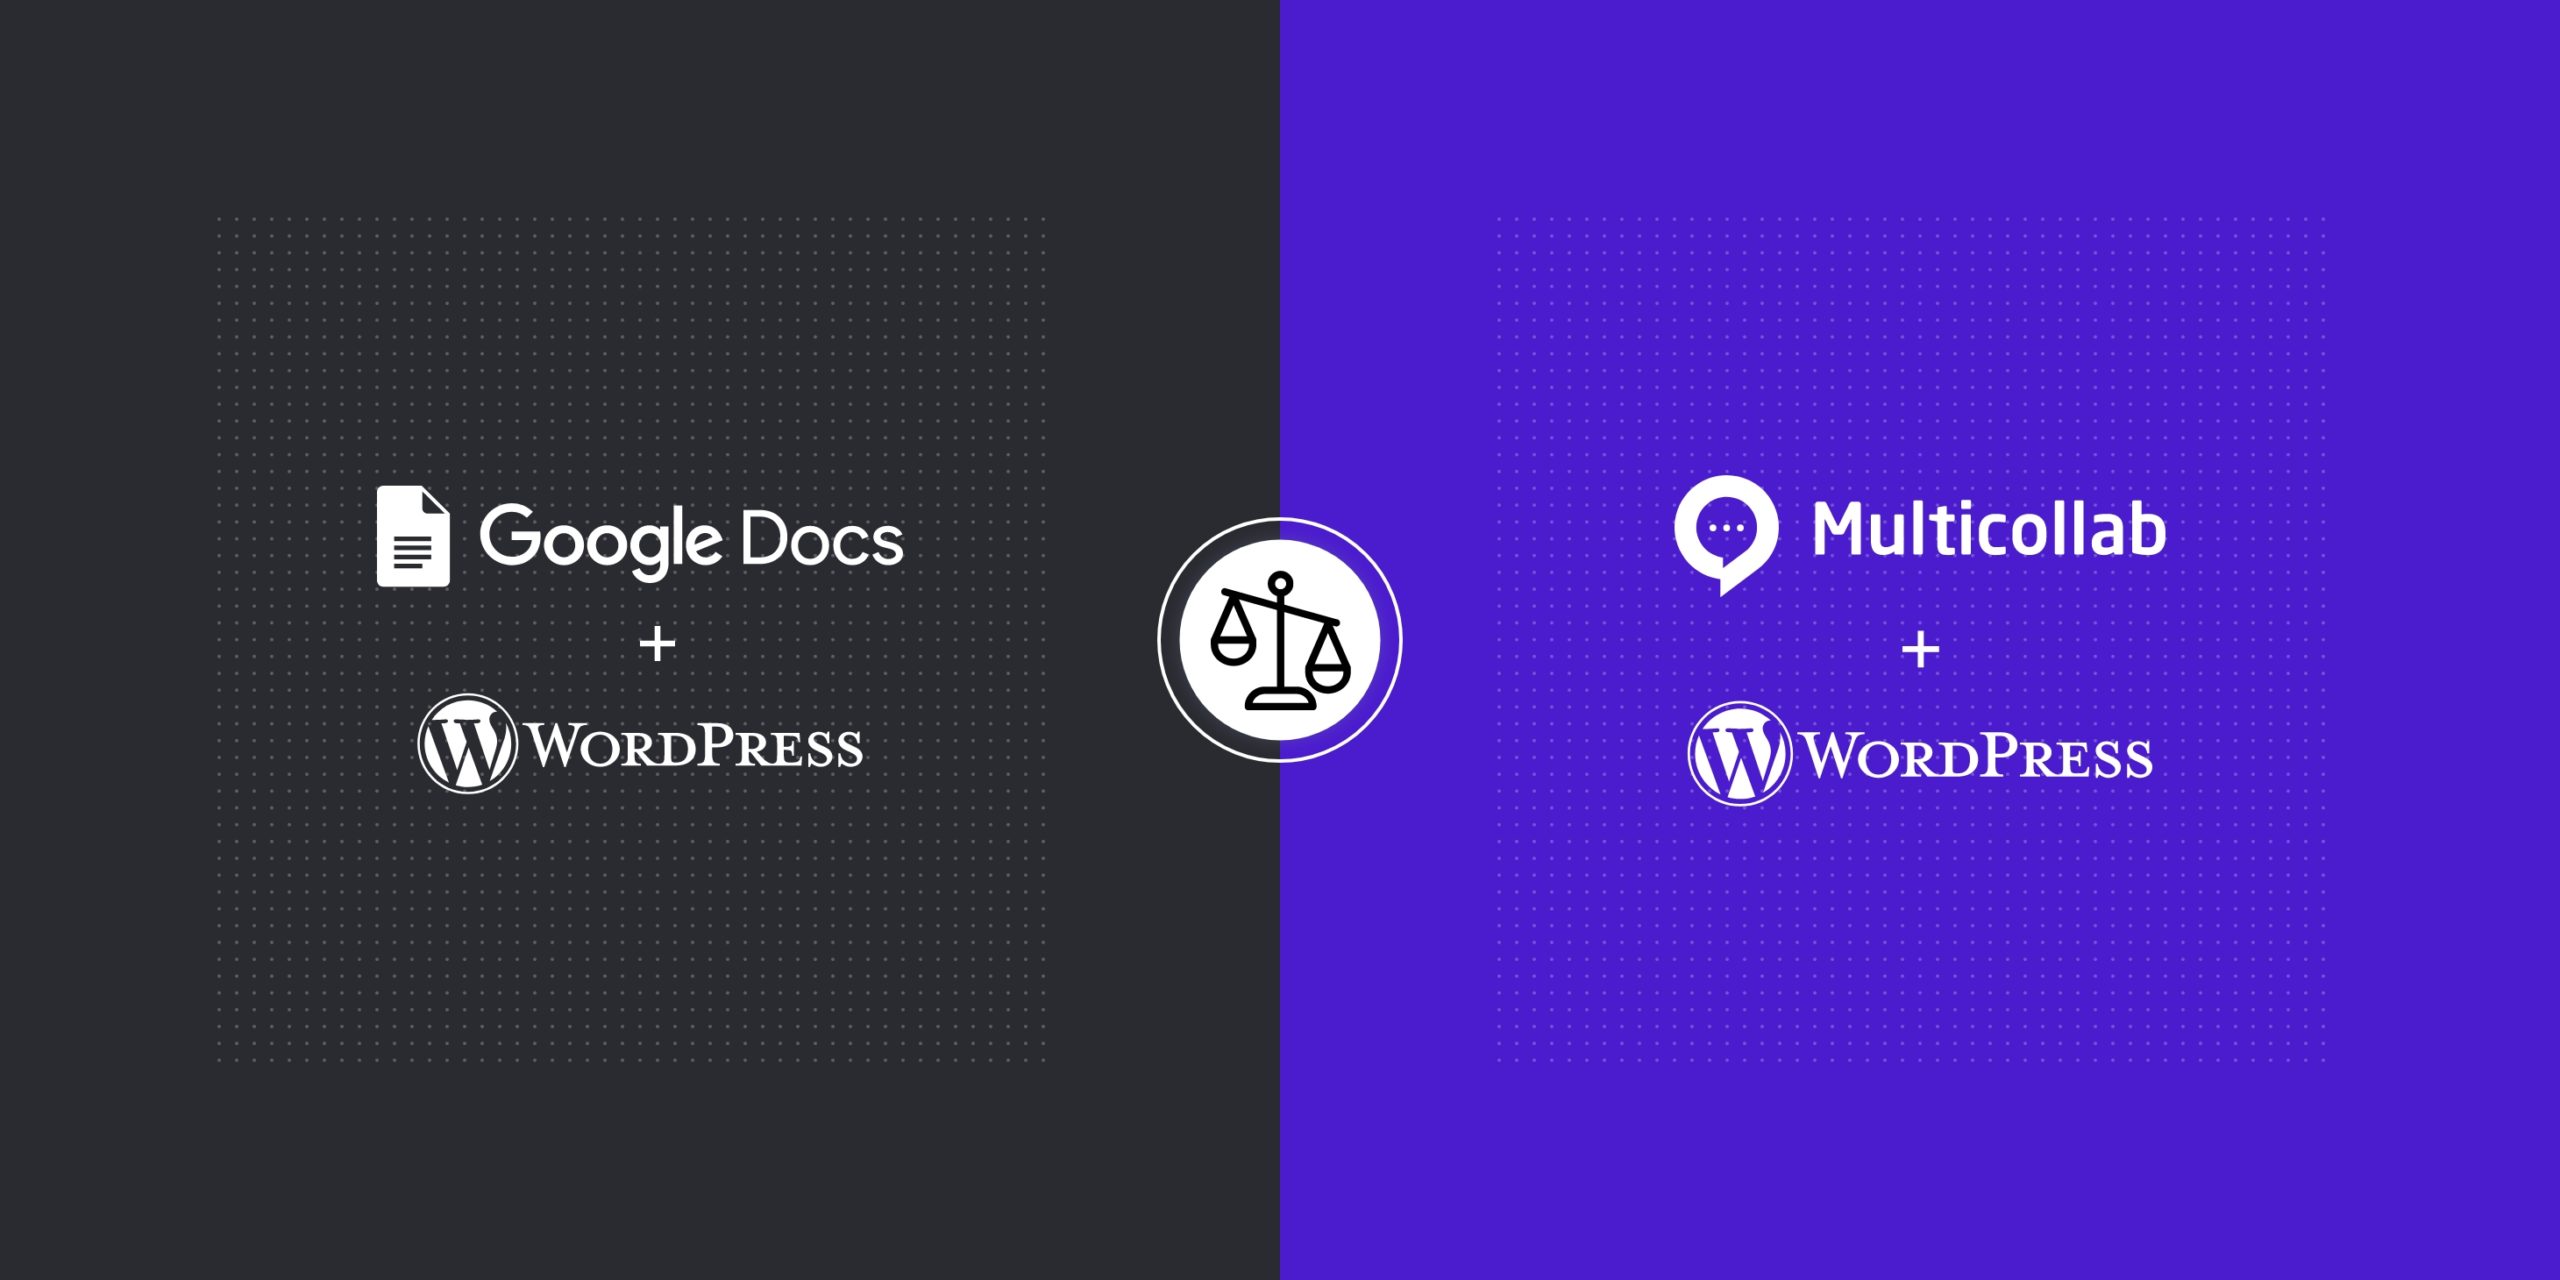 Google Docs vs Multicollab